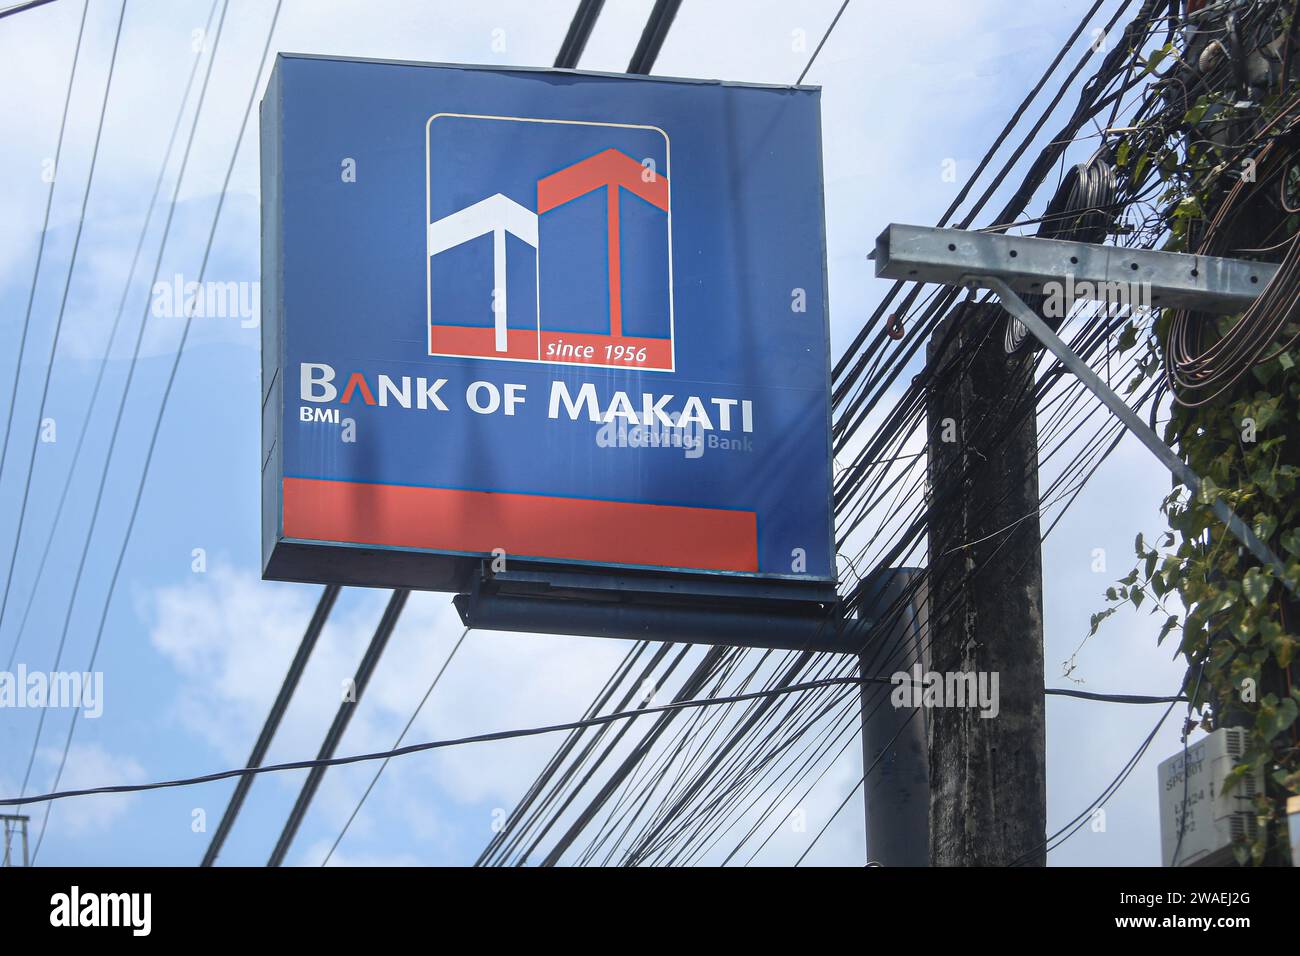 Bank of Makati (BMI) signage, Batangas city branch, logo & slogan: A Savings Bank, Philippine banking, Philippines Southeast Asia financial operations Stock Photo